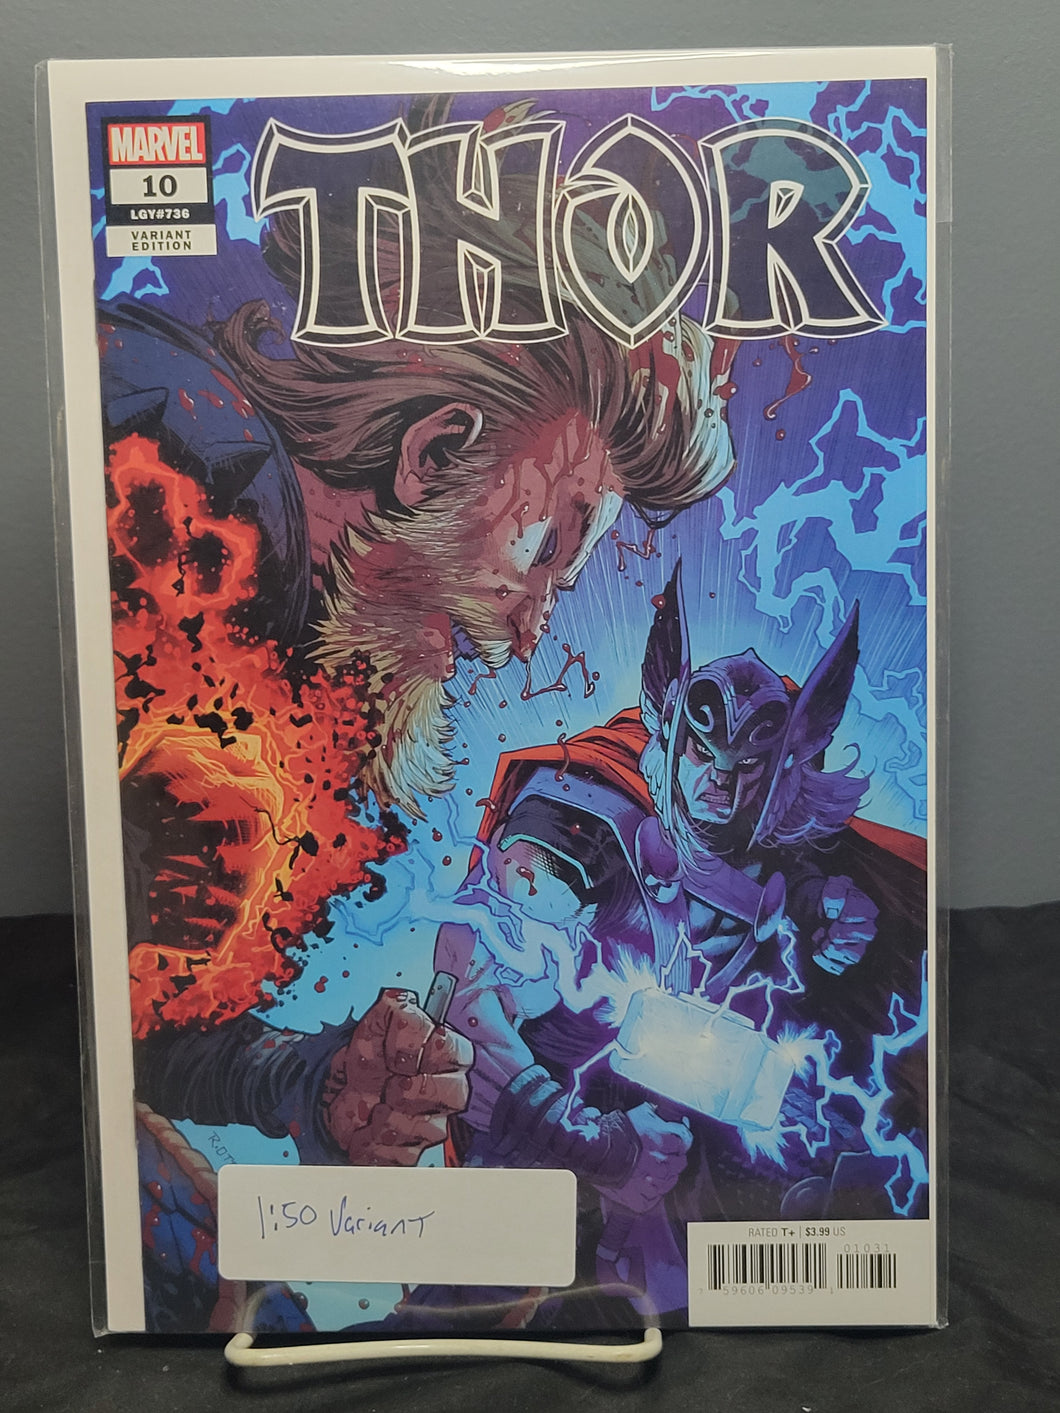 Thor #10 1:50 Variant